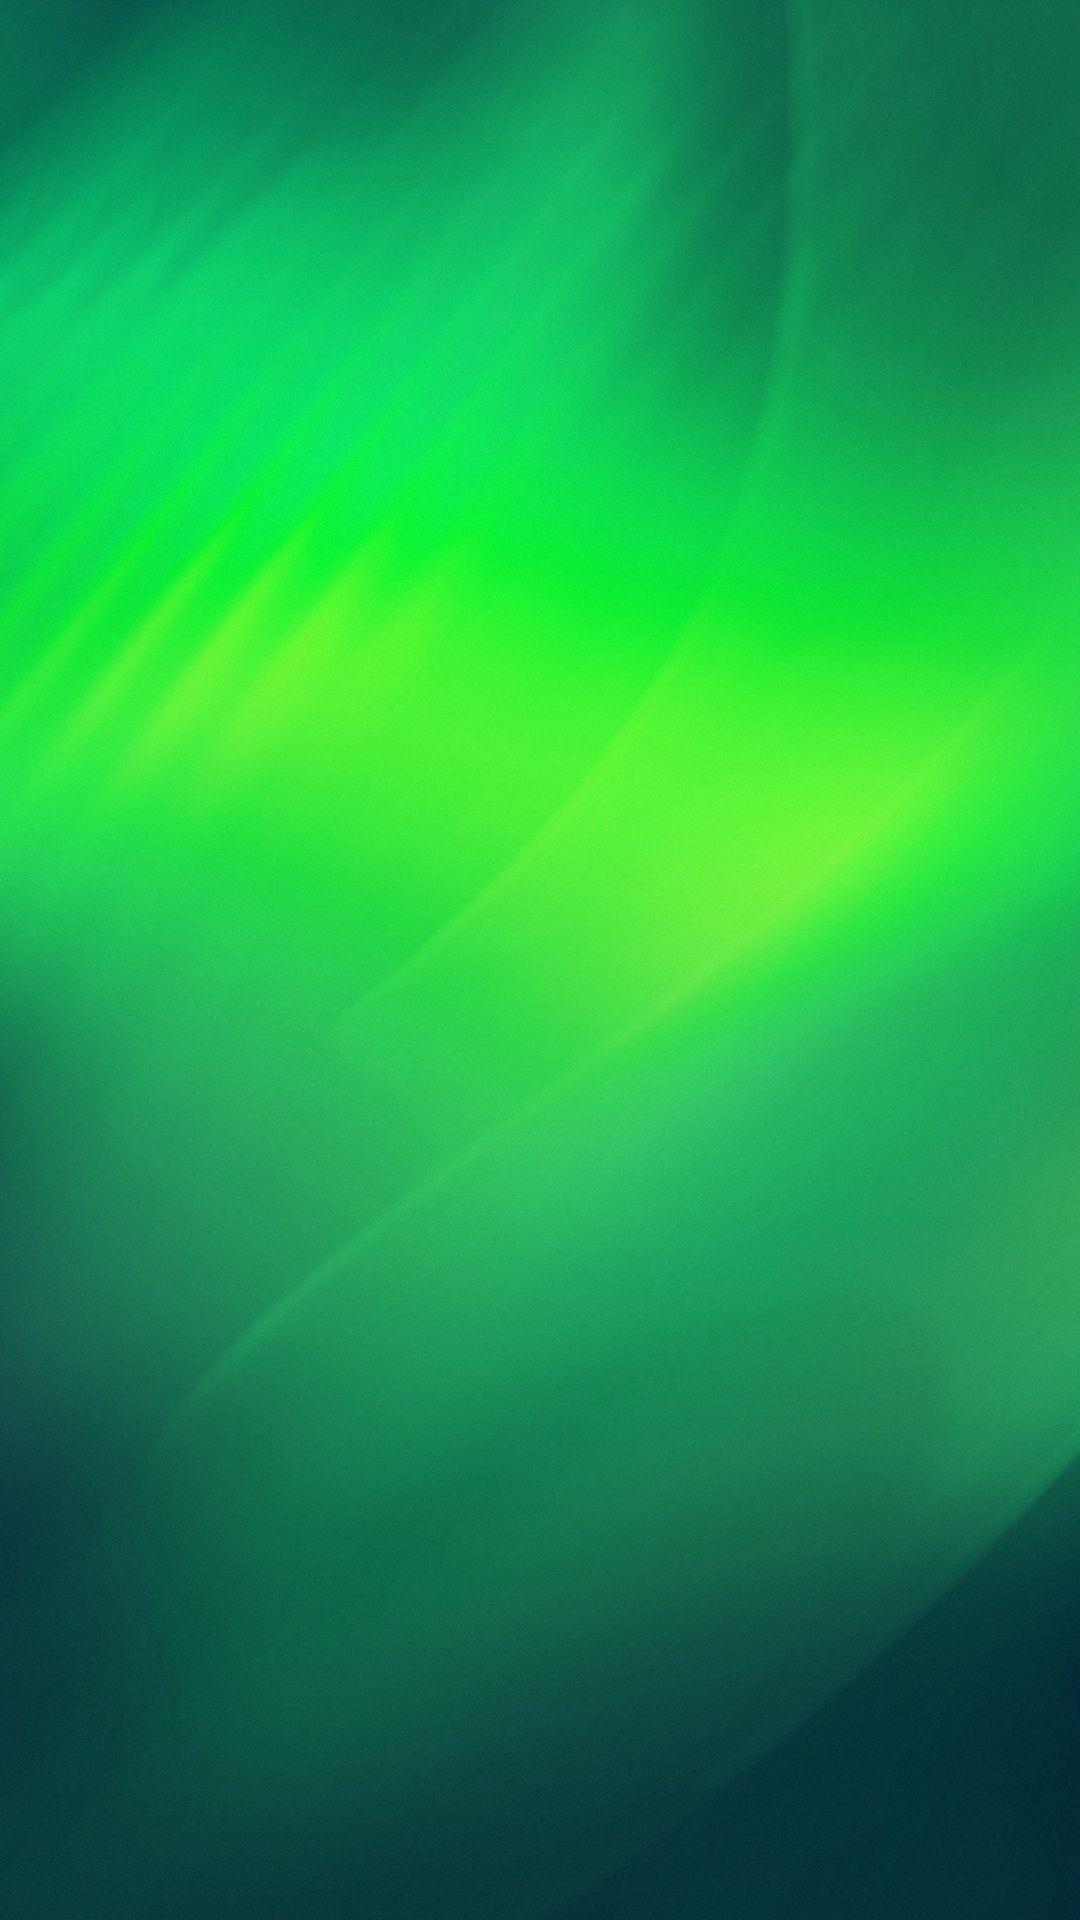 Abstract Green Light Pattern iPhone 8 Wallpaper. Phone wallpaper image, iPhone 5s wallpaper, Green wallpaper